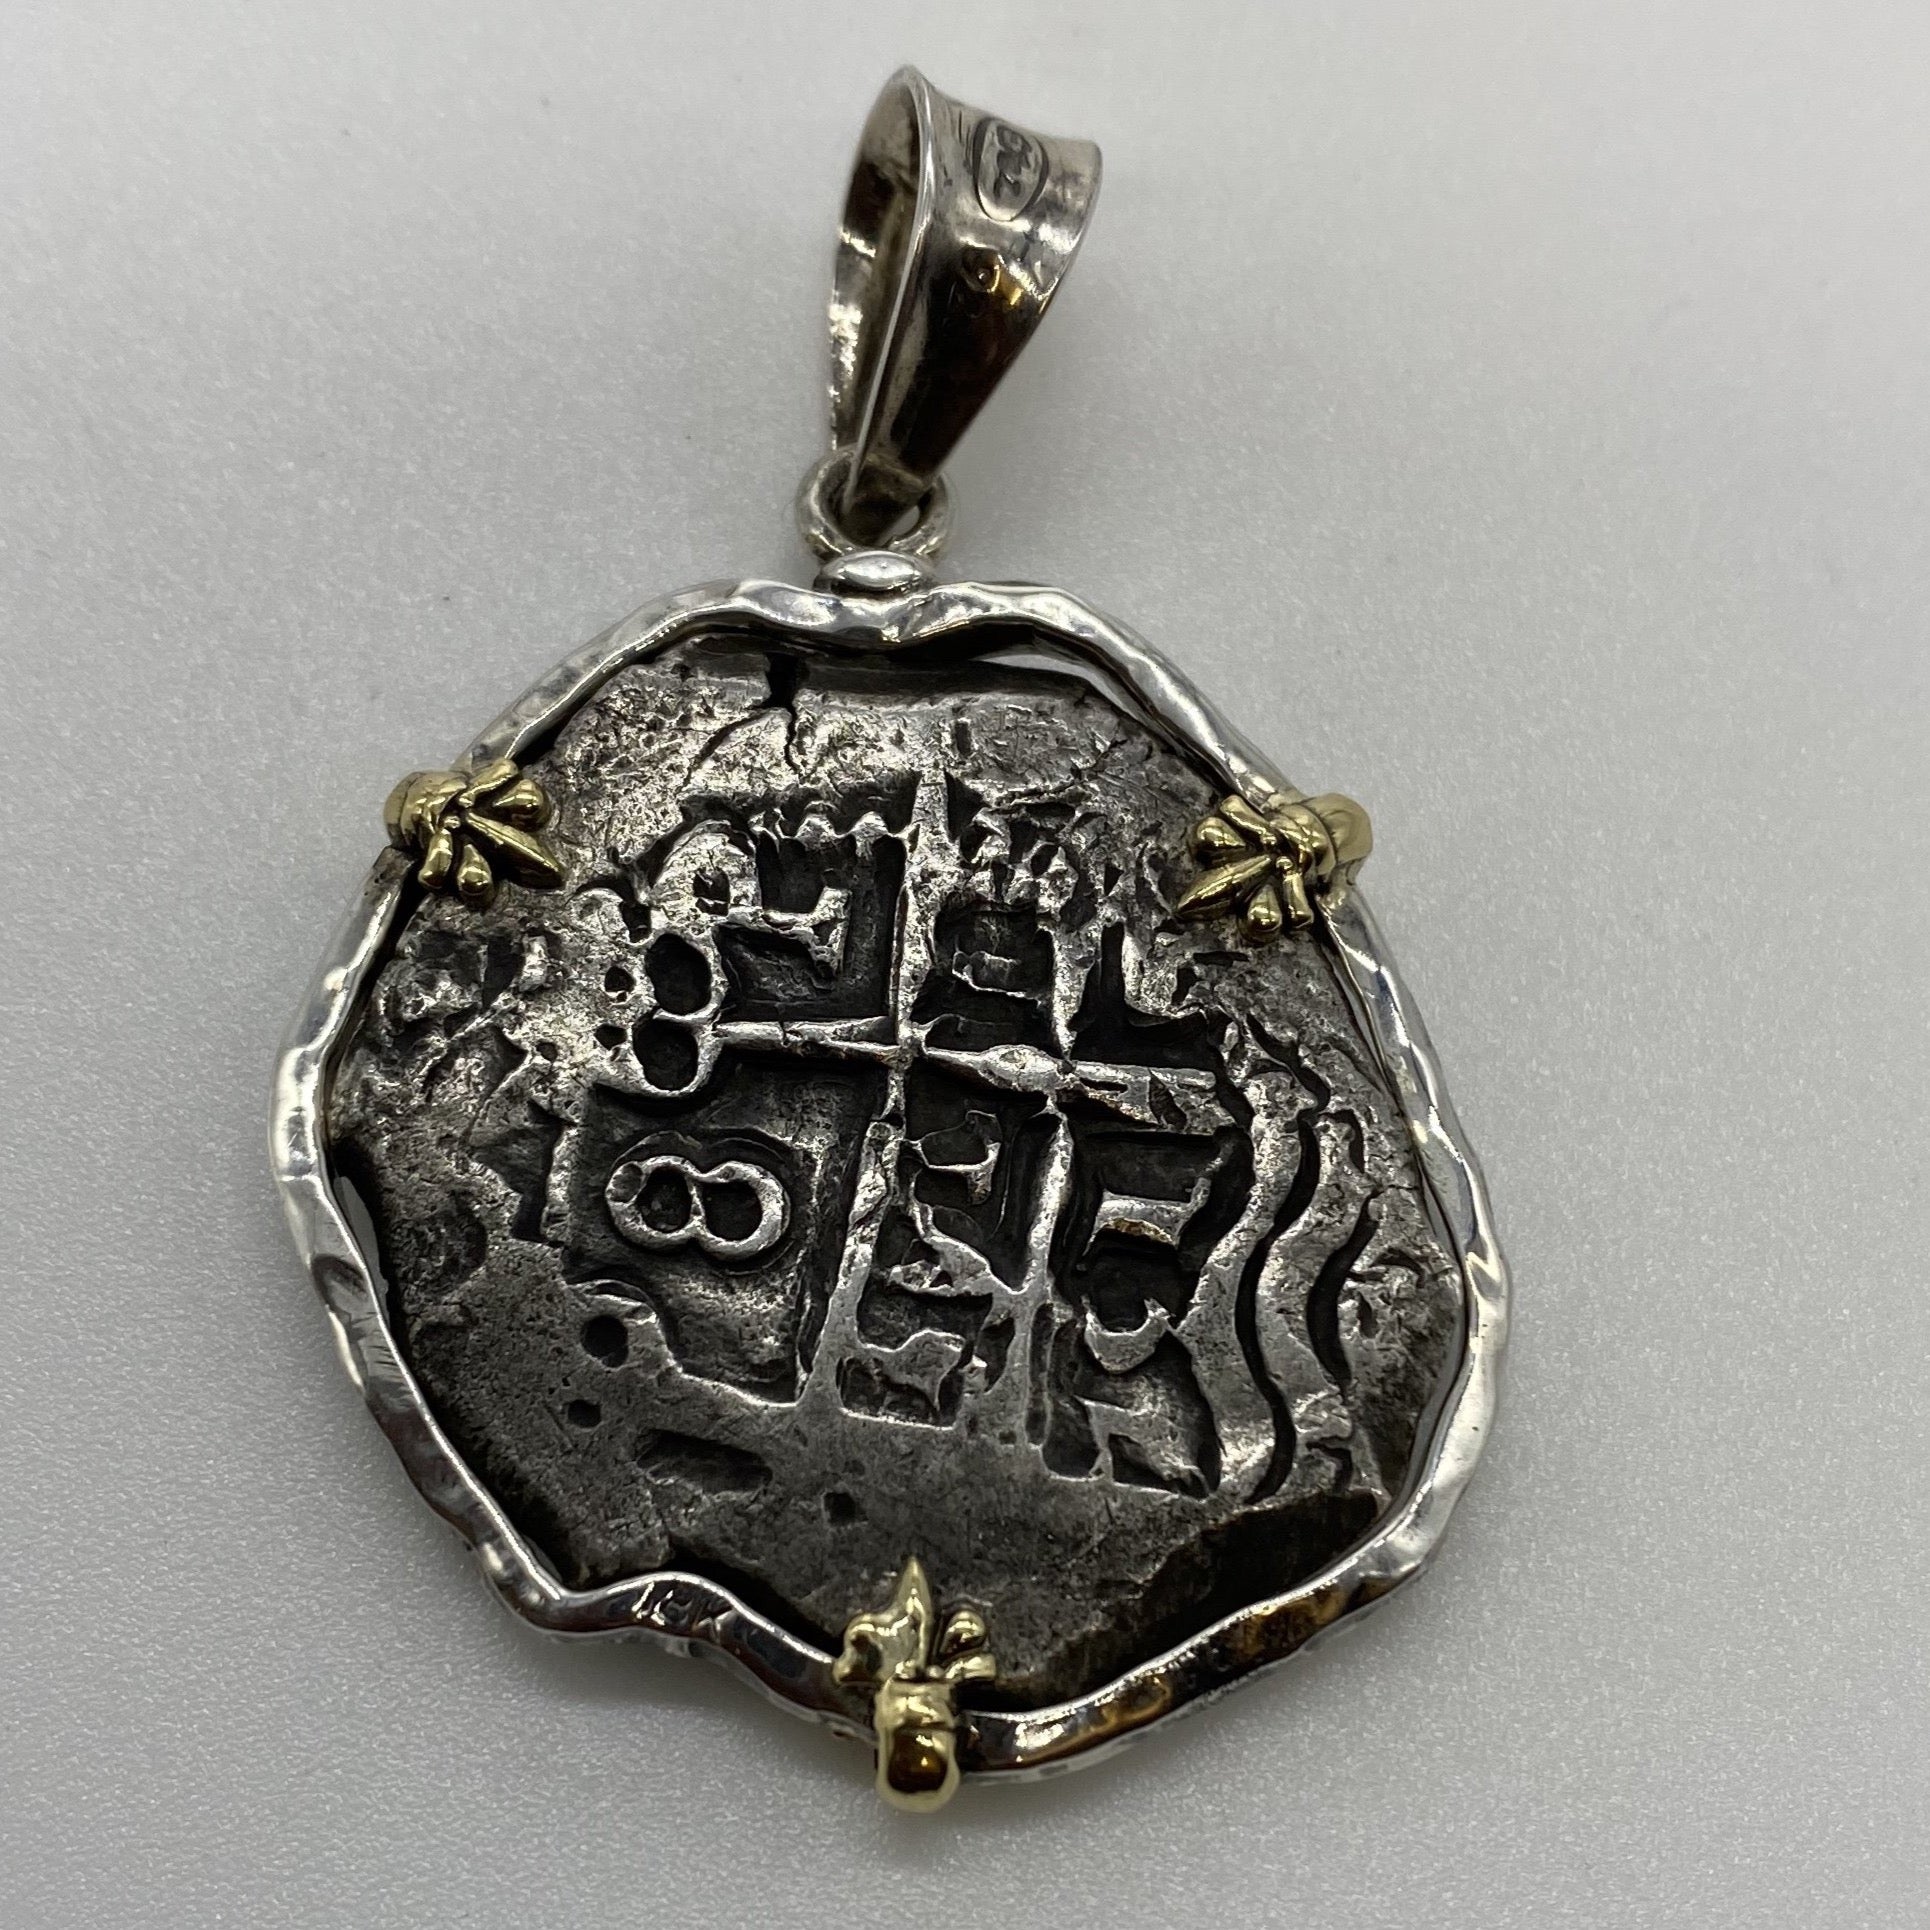 Spanish Cob Coins - Shipwreck Treasures of the Keys